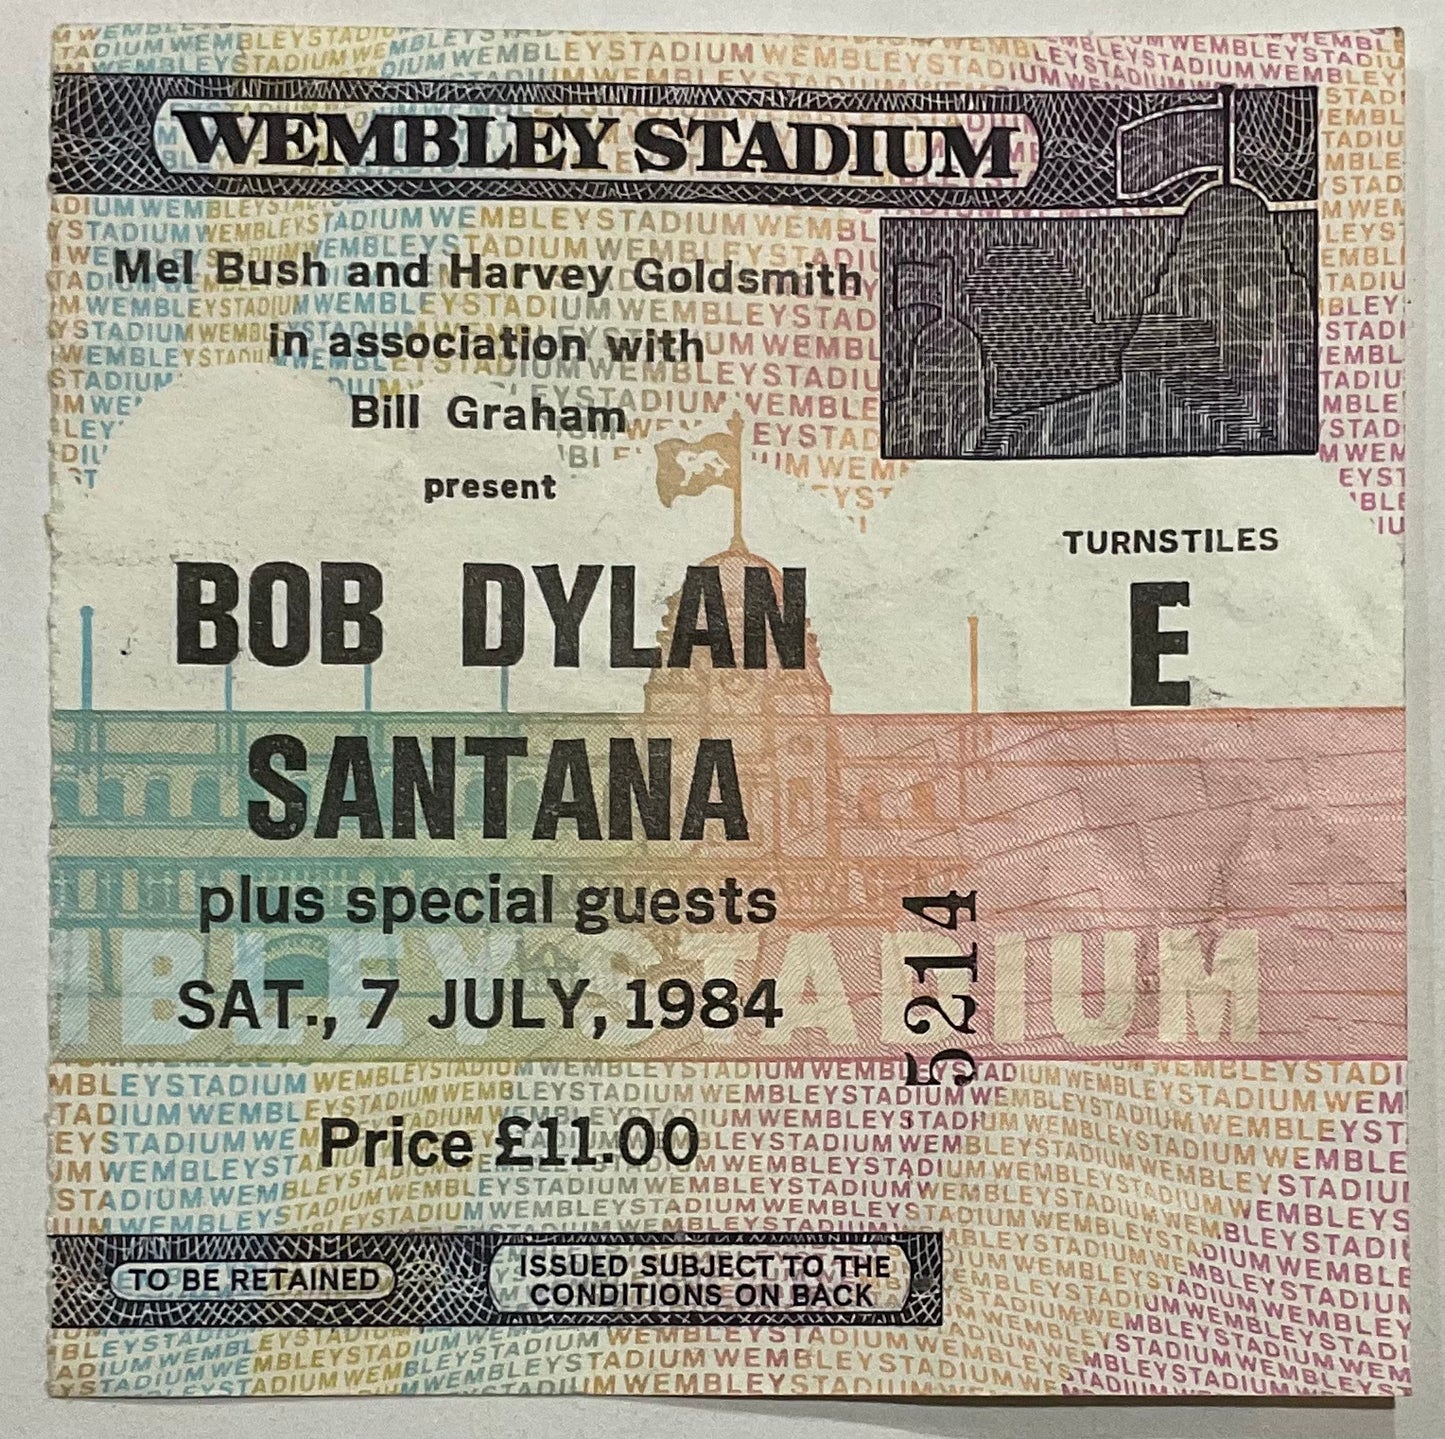 Bob Dylan Santana Original Used Concert Ticket Wembley Stadium London 7th Jul 1984